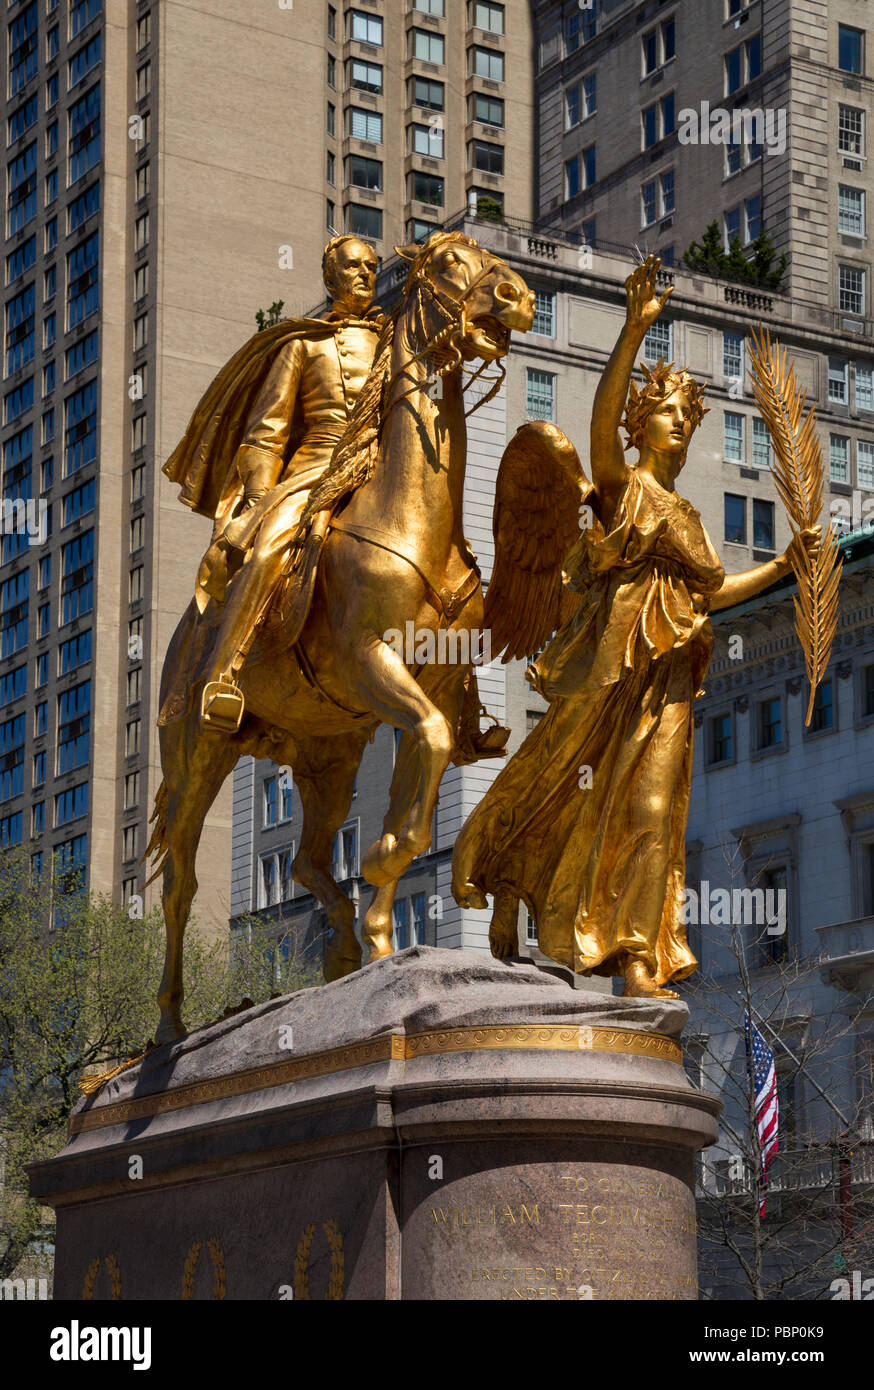 Gilded-bronze statue of William Tecumseh Sherman in Grand Army Plaza, New York Stock Photo